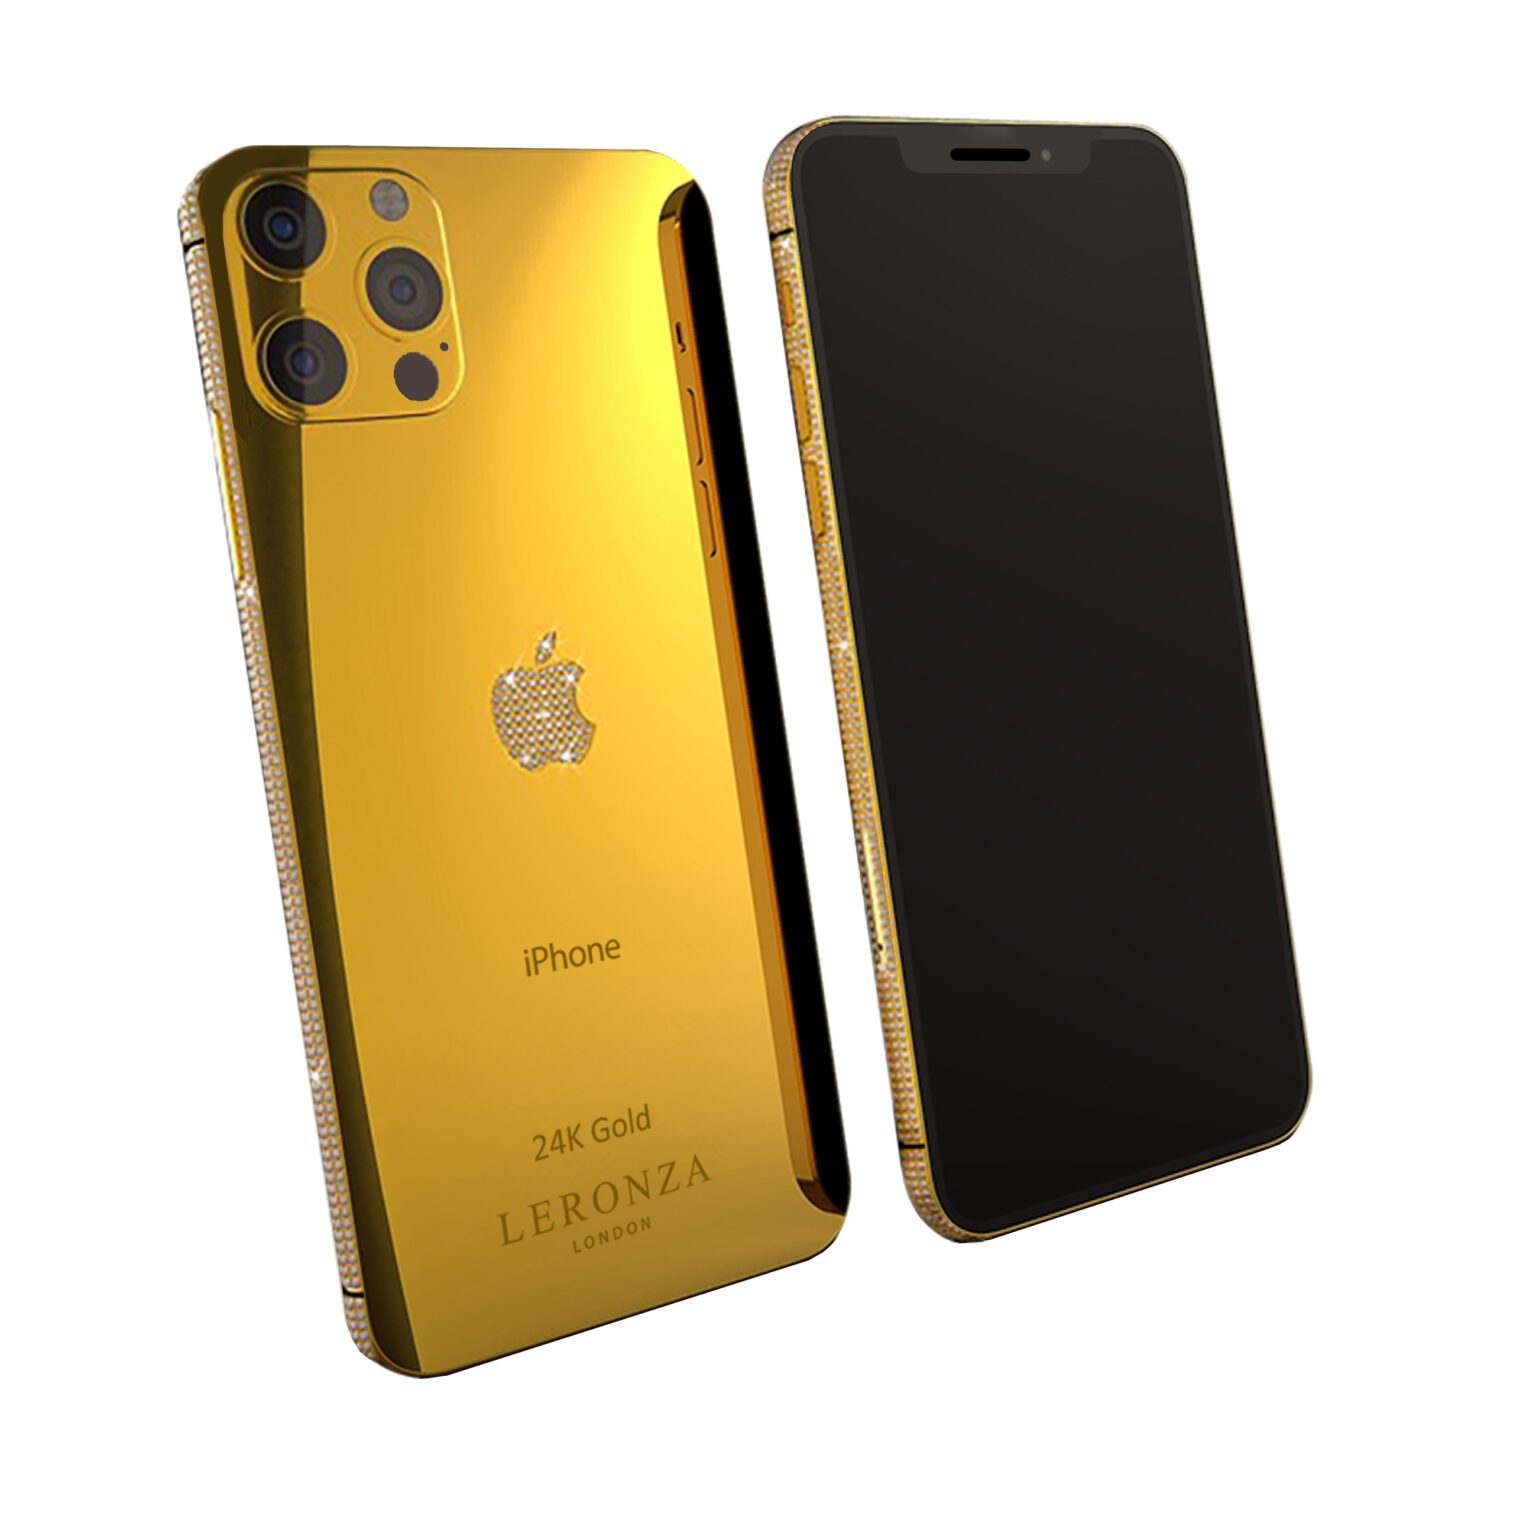 leronza-24k-gold-iphone-12-pro-diamonds-copy-1536x1536-4850560